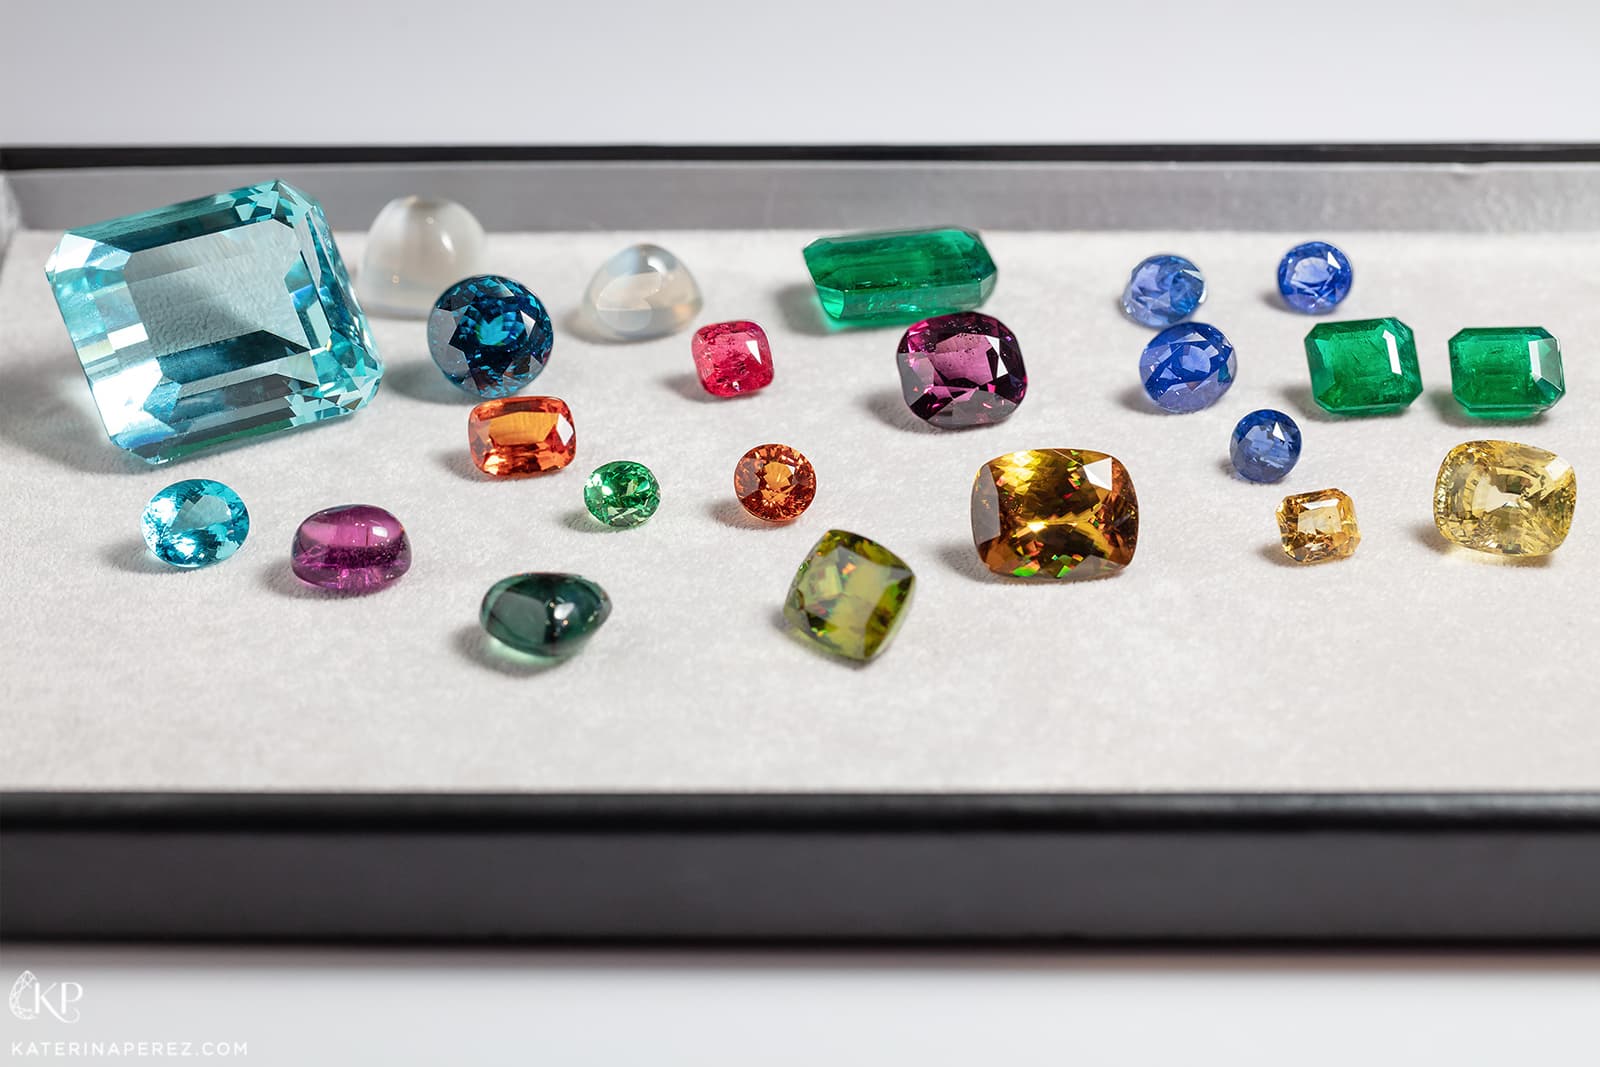 P&P Gems selection of gemstones including 450 cts Brazilian aquamarine, Paraiba tourmalines, emeralds, sphenes, spessartite garnets, moonstone and spinels. Photo by Simon Martner